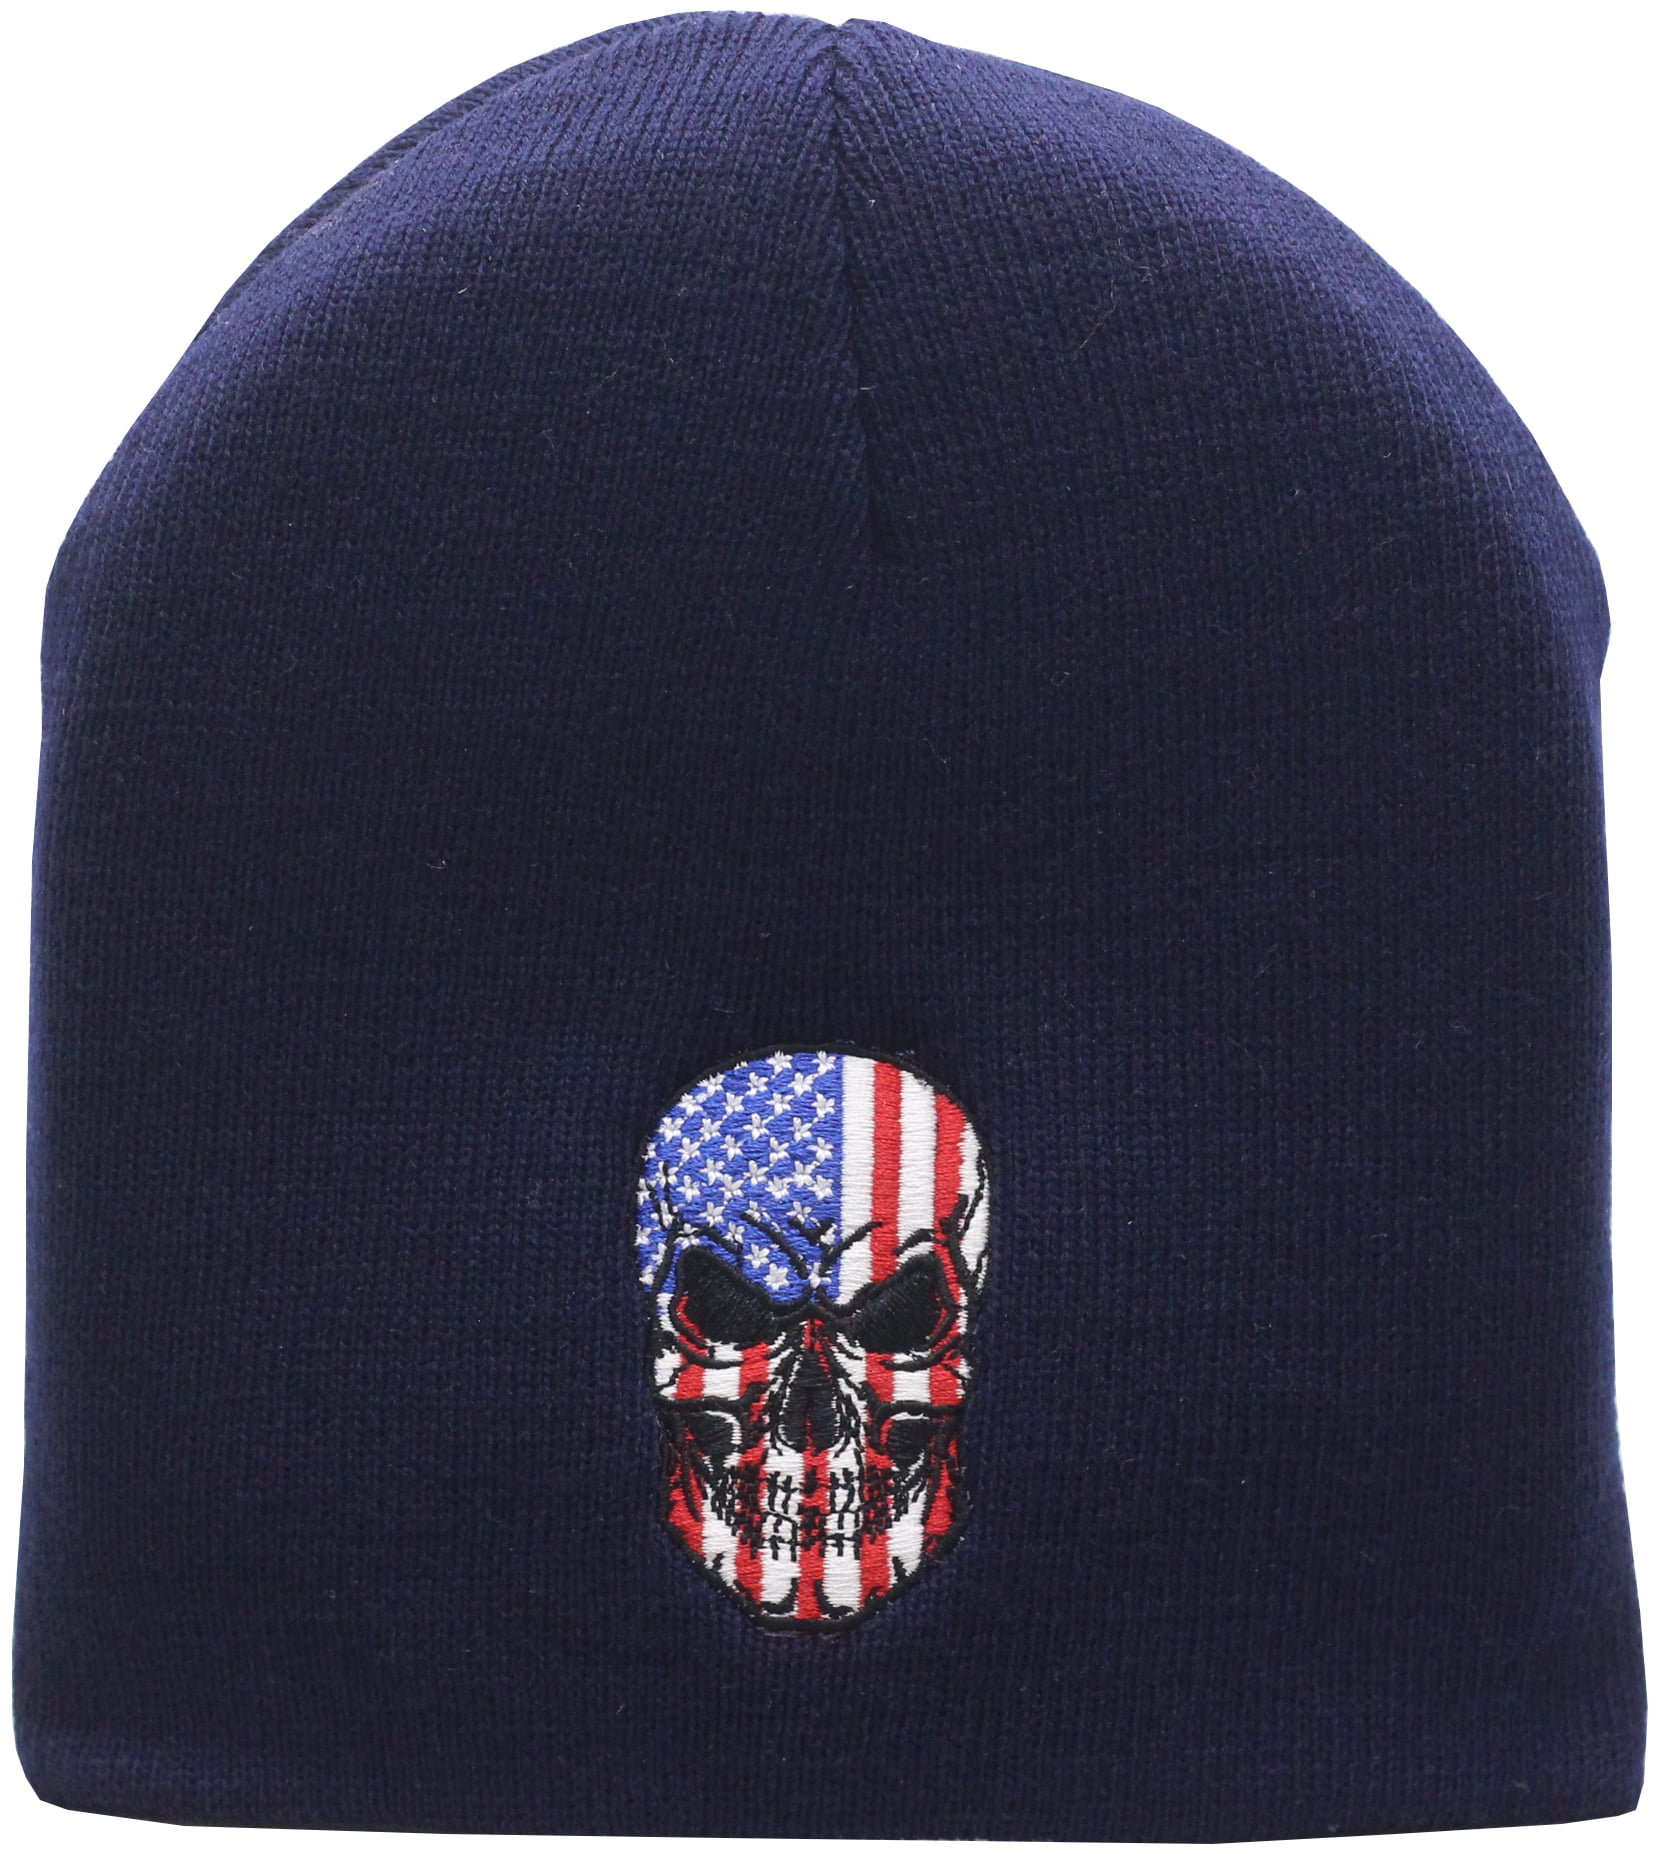 South Carolina State Flag Logo Slouchy Knit Skull Hat for Women Men Soft Warm Skull Cap 